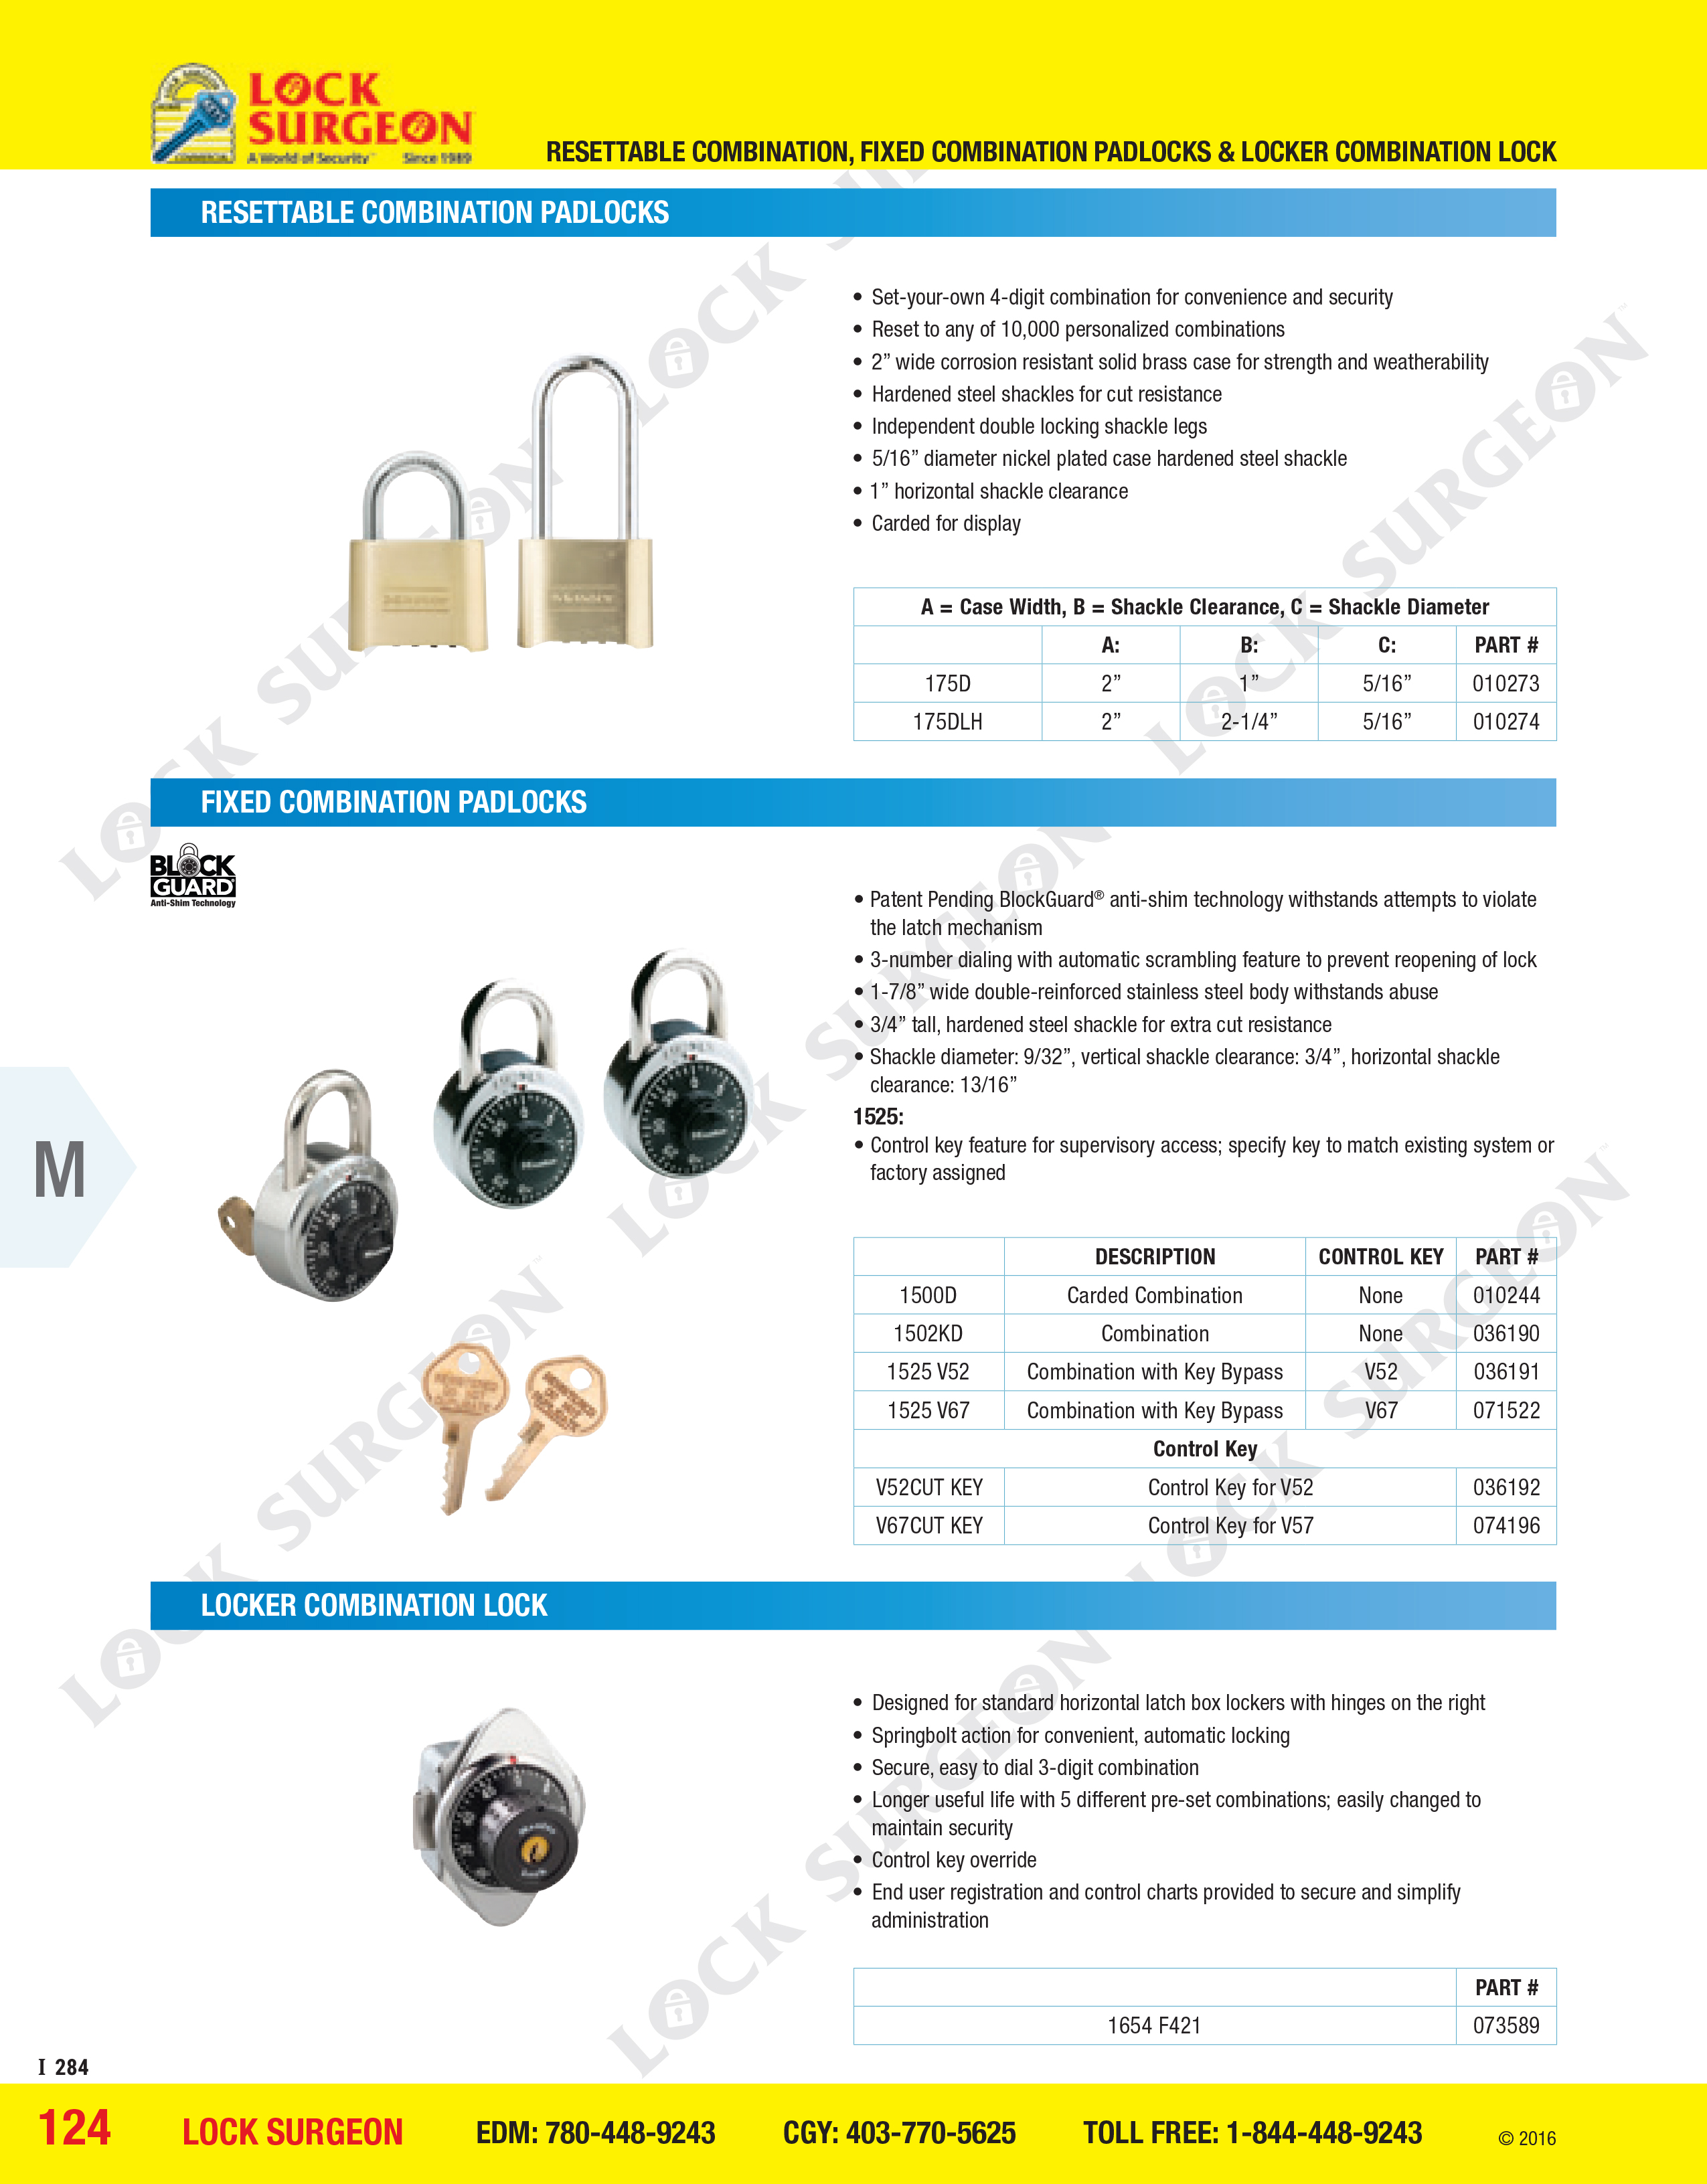 Leduc Resettable combination padlocks, fixed combination padlocks, locker combination locks